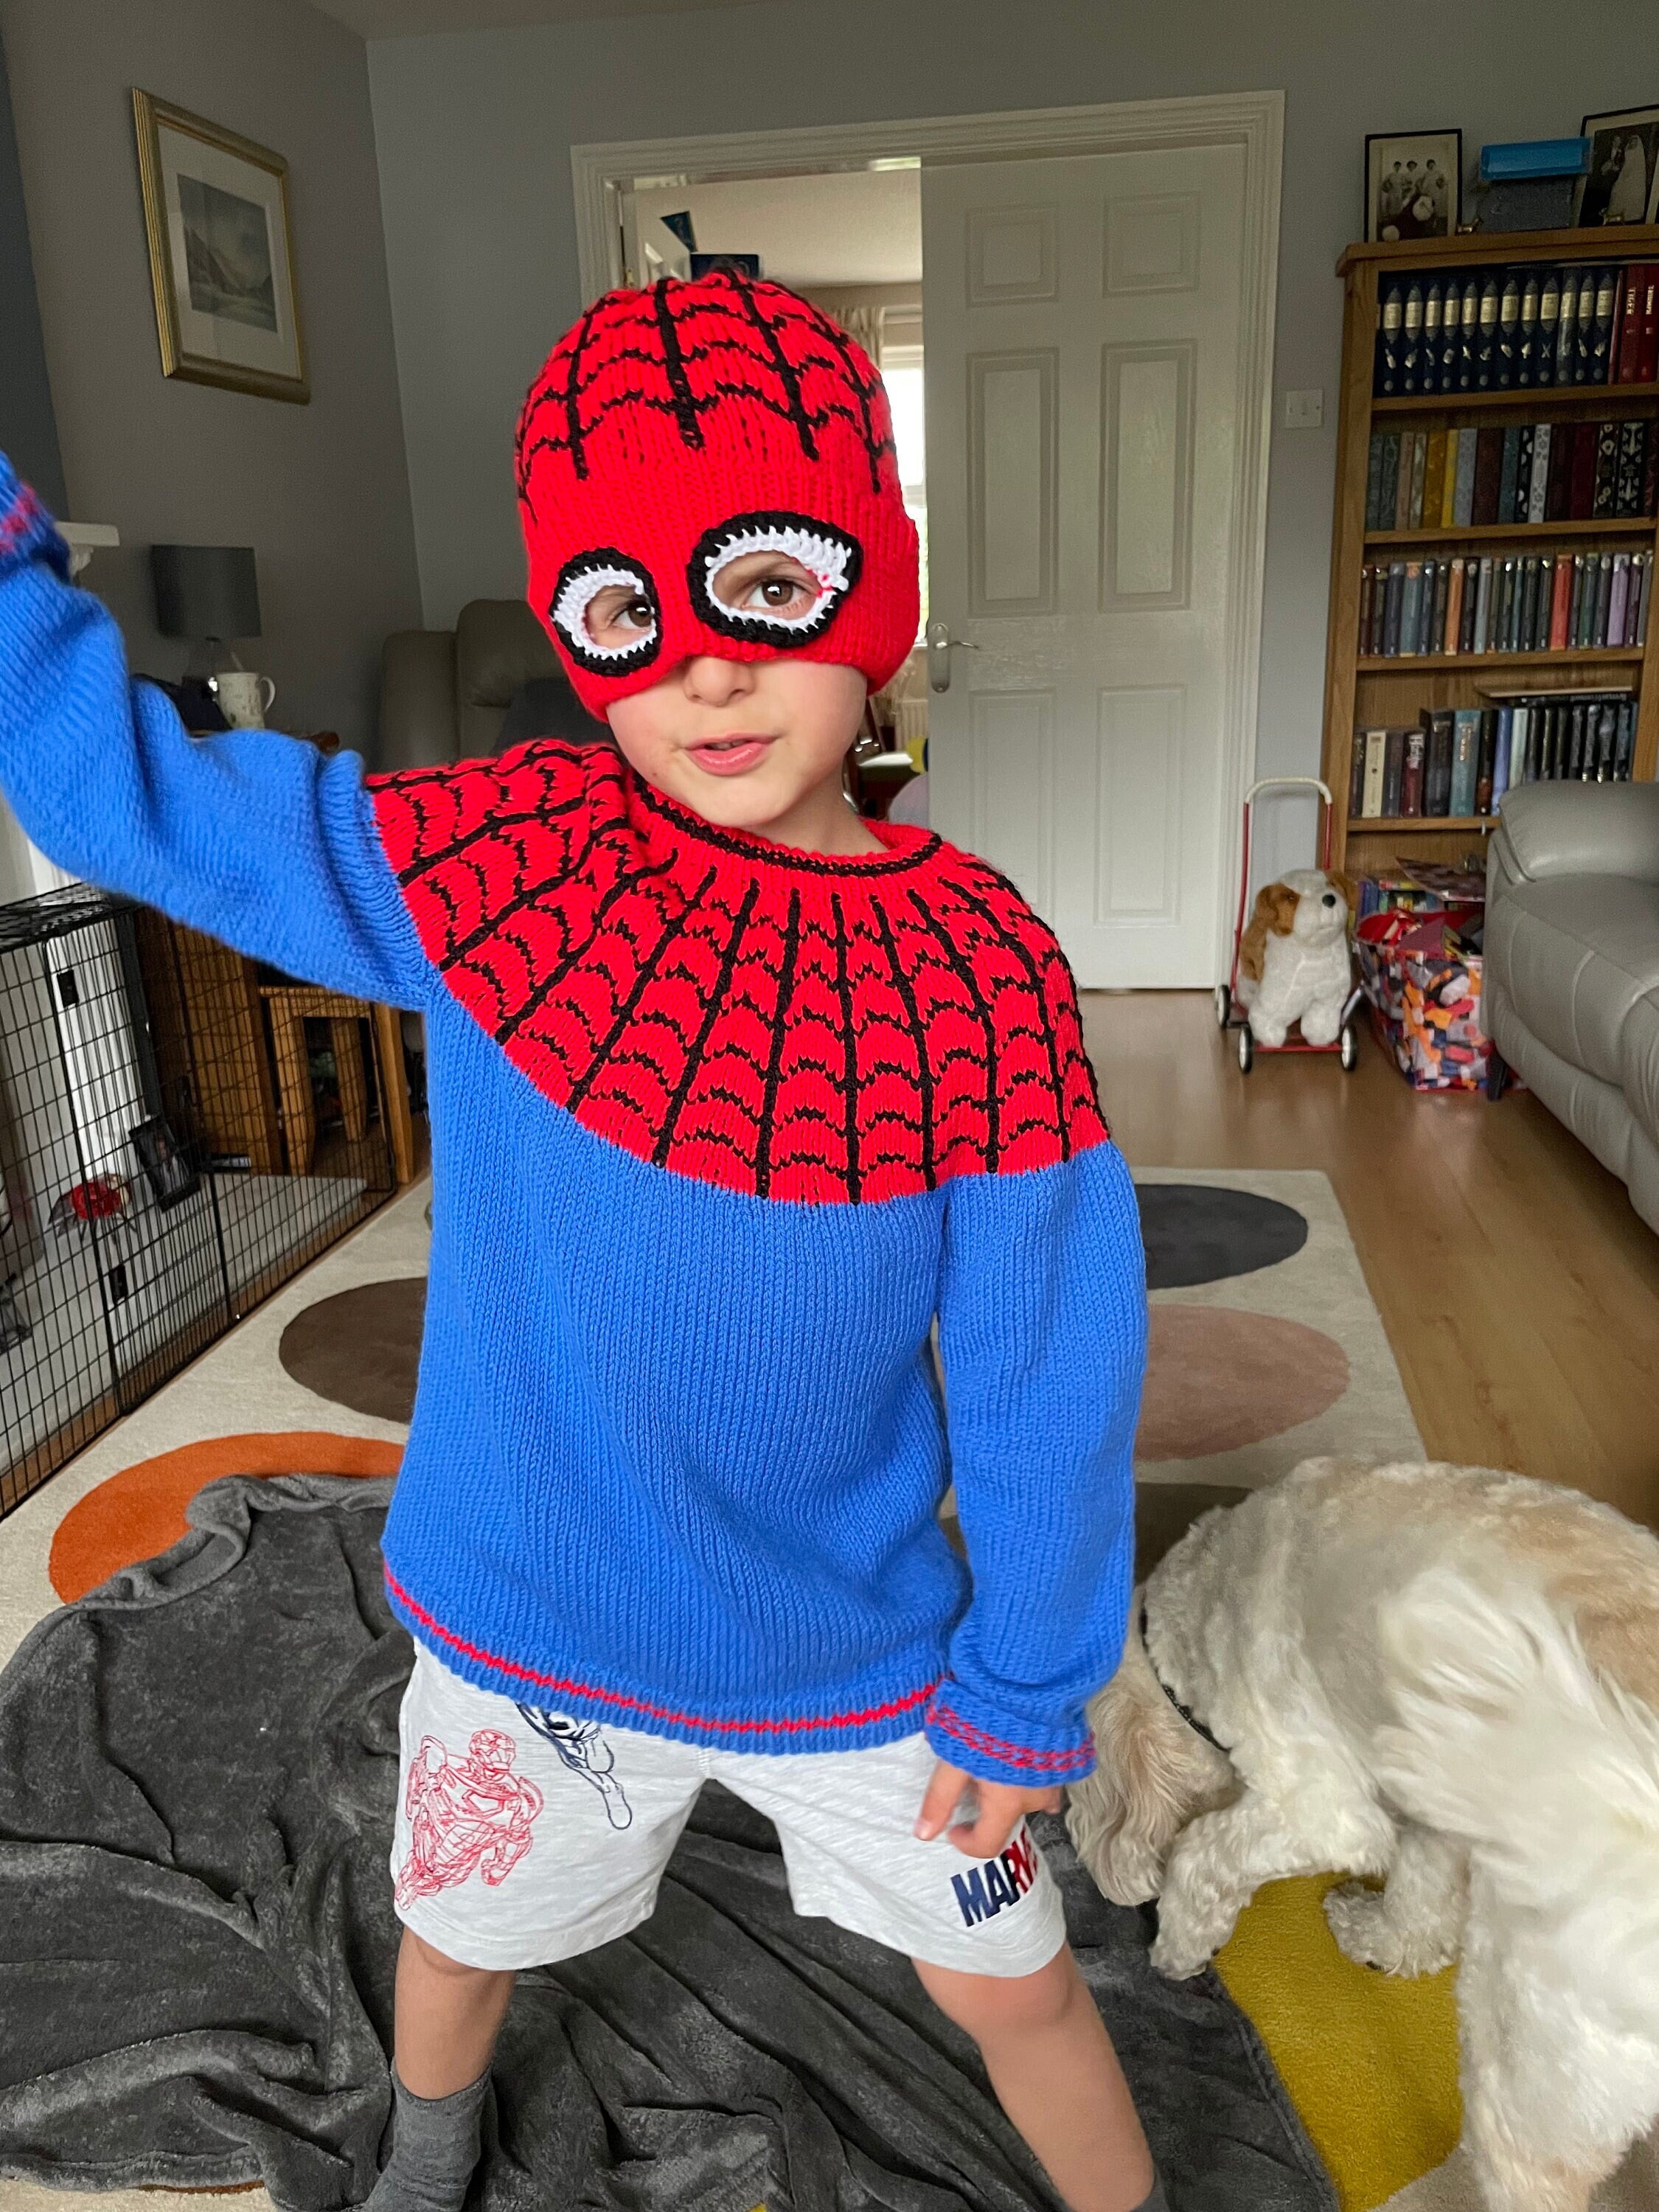 Iron Spiderman Costume Boys Spider Man Suit Cosplay Onesie For